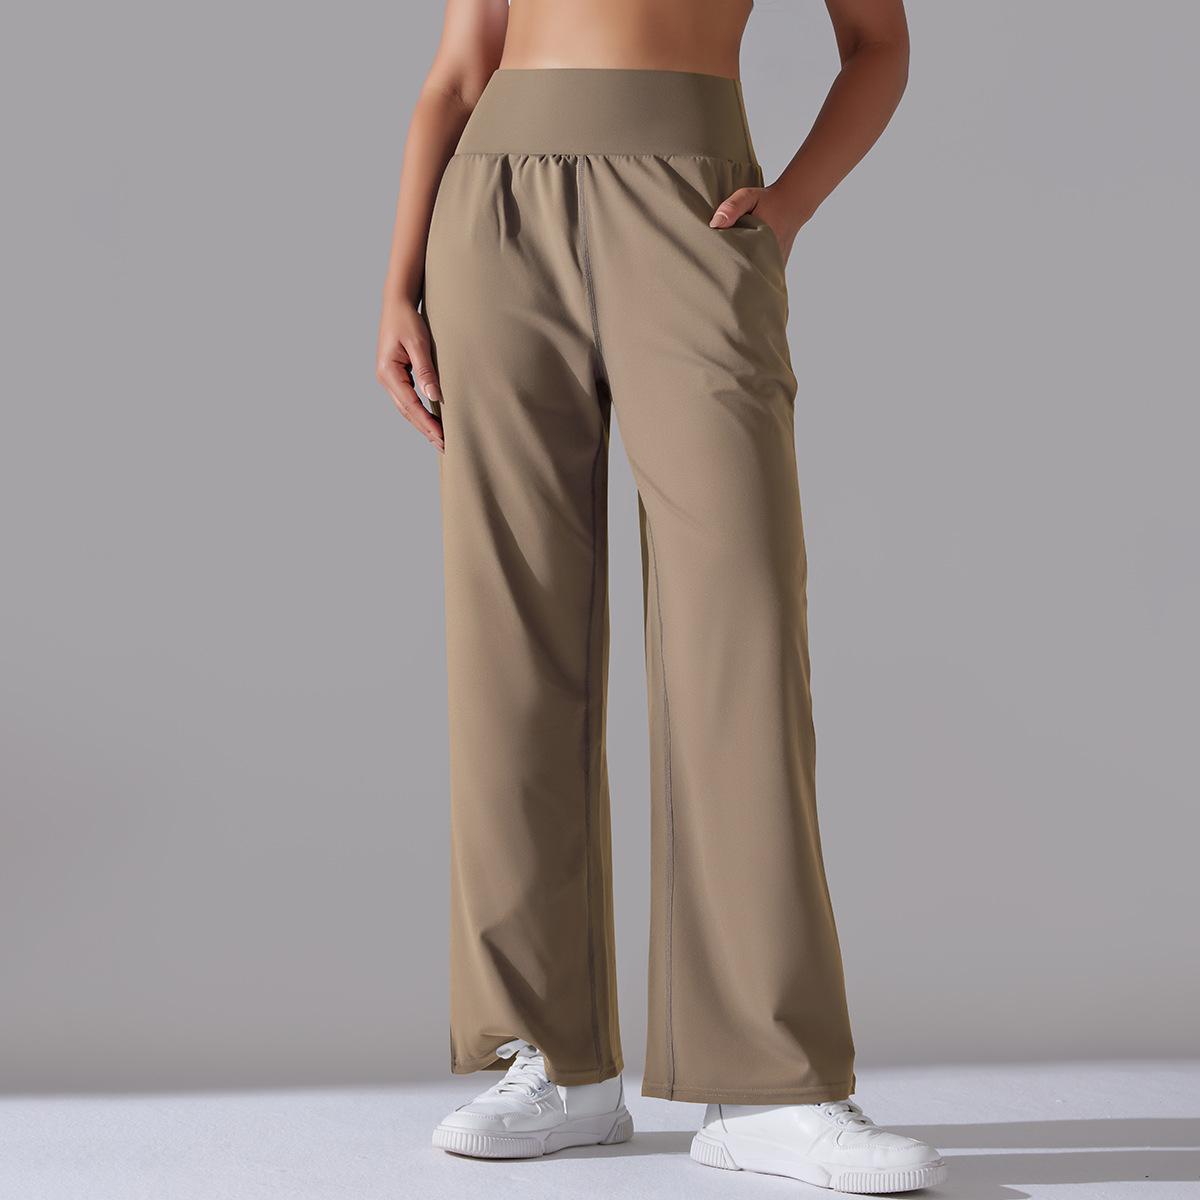 BamBam Women Sports Casual Loose Yoga Pants Pocket High Waist Wide Leg Pants - BamBam